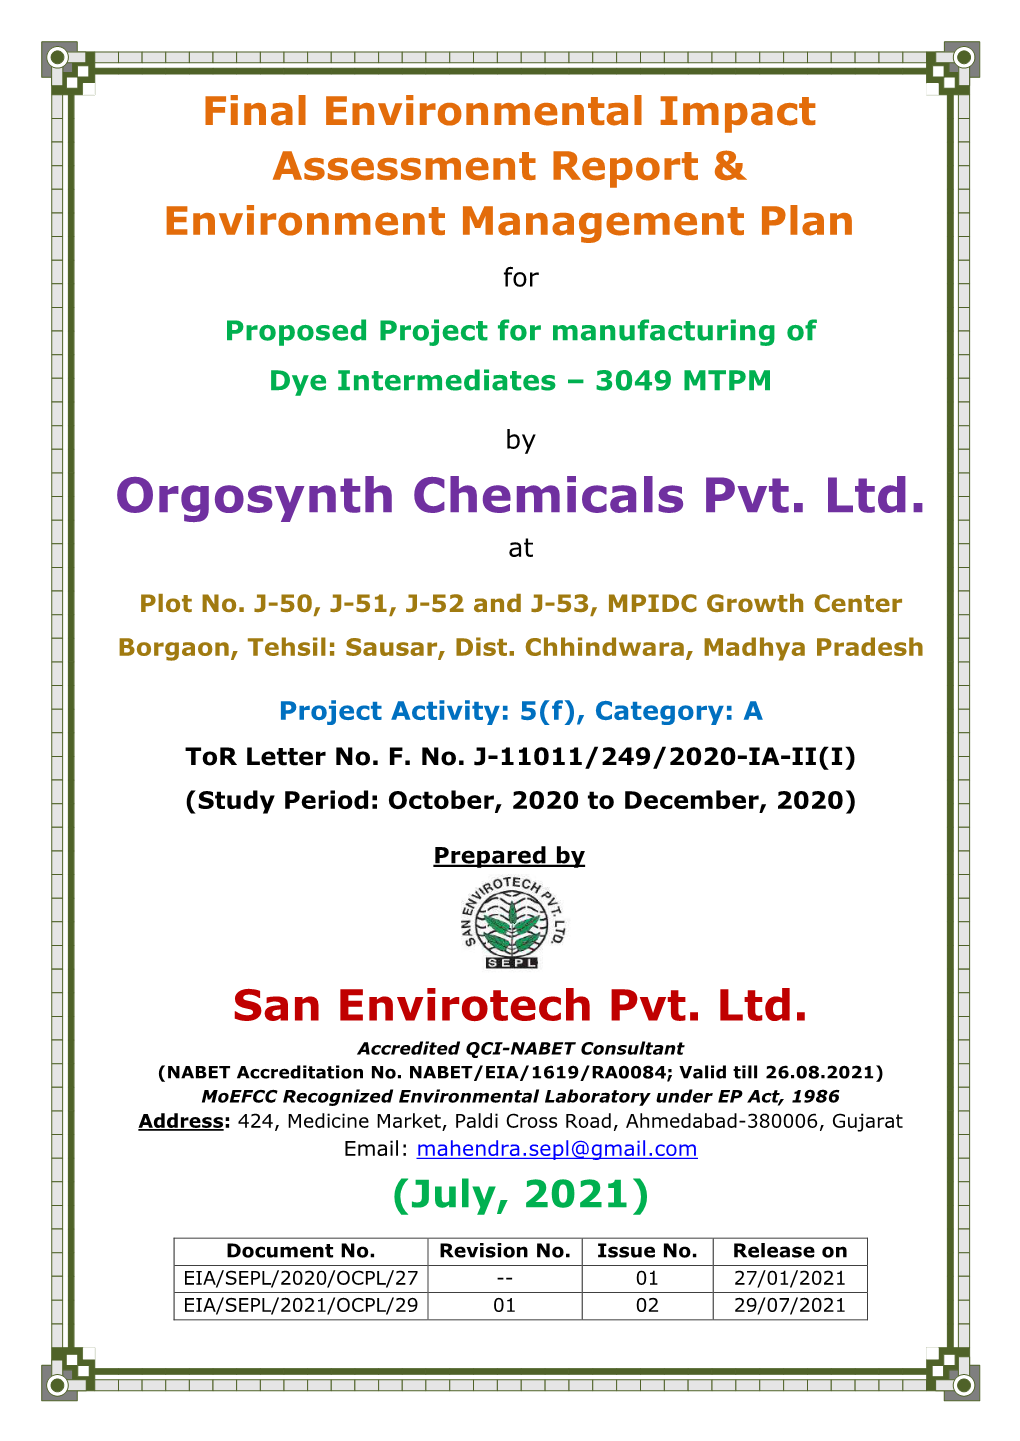 Orgosynth Chemicals Pvt. Ltd. At